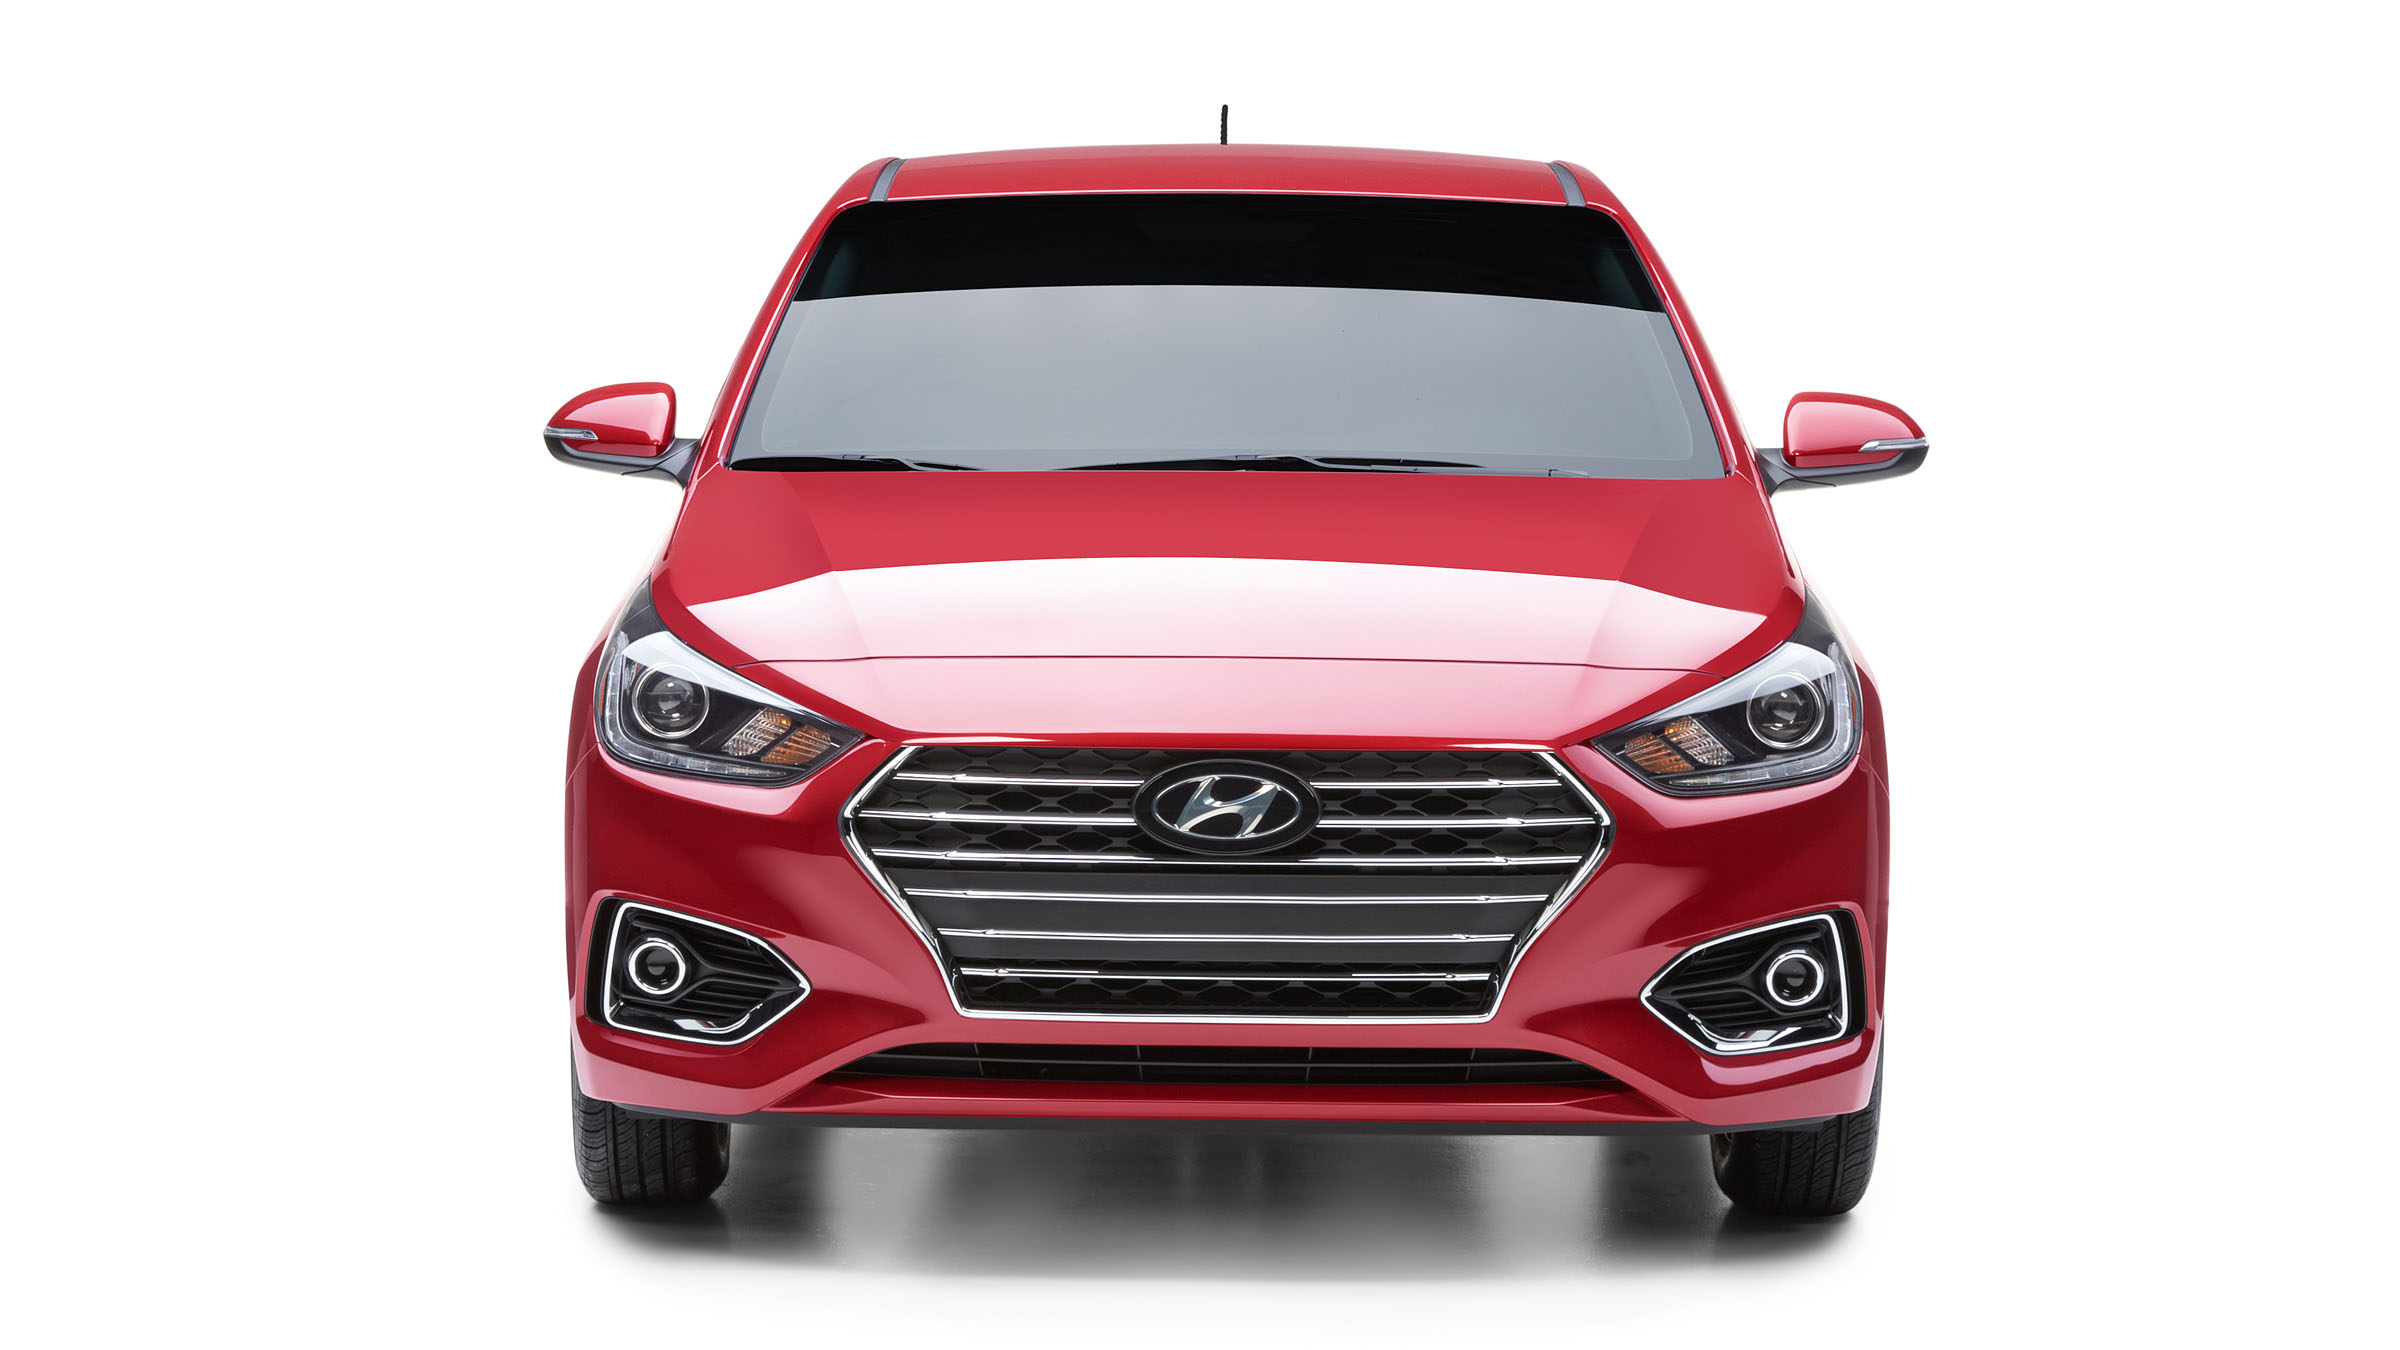 Hyundai Reveals Details of Next-generation Accent